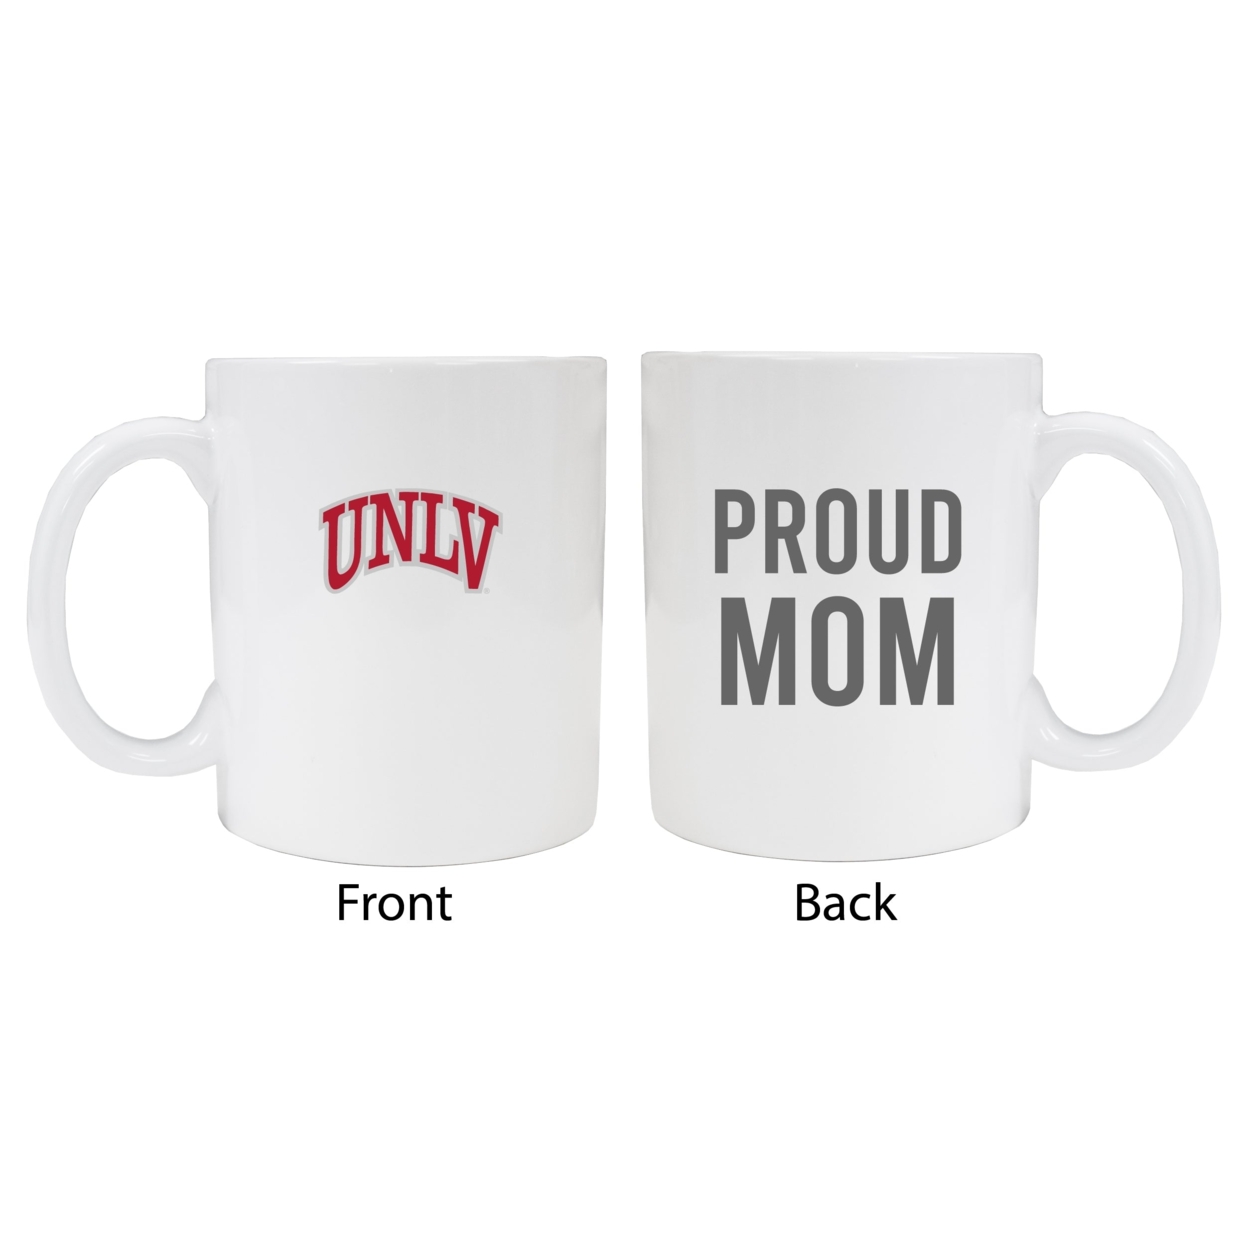 UNLV Rebels Proud Mom Ceramic Coffee Mug - White (2 Pack)